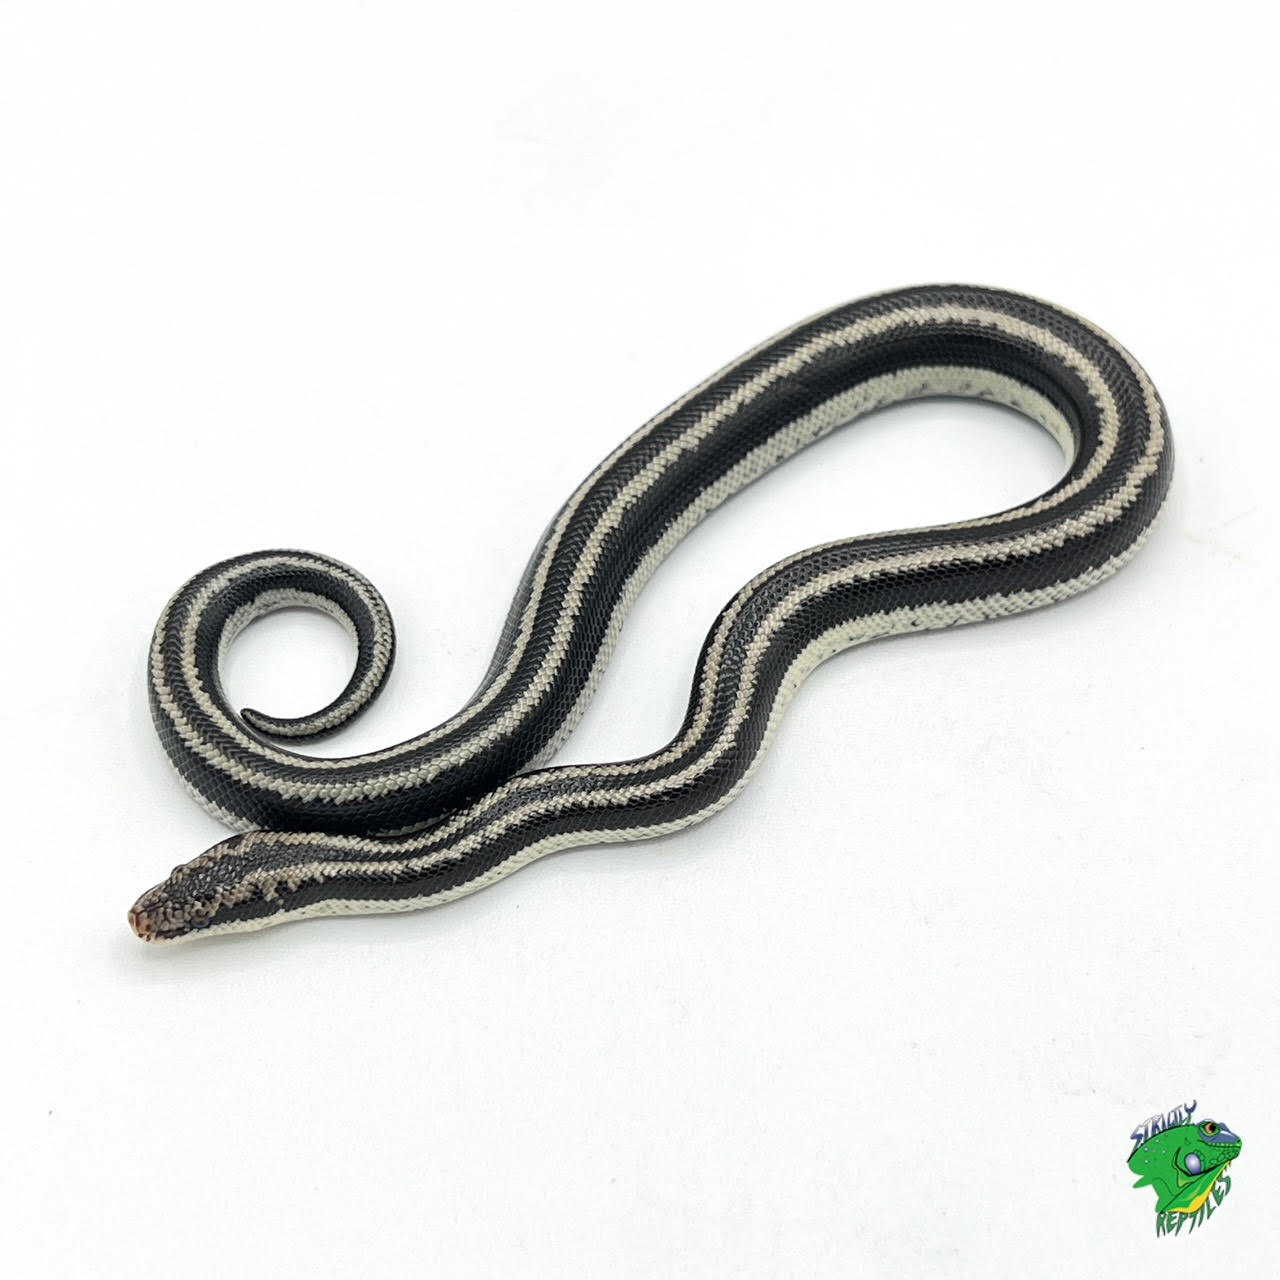 Rosy Boa Snake — Turtle Bay